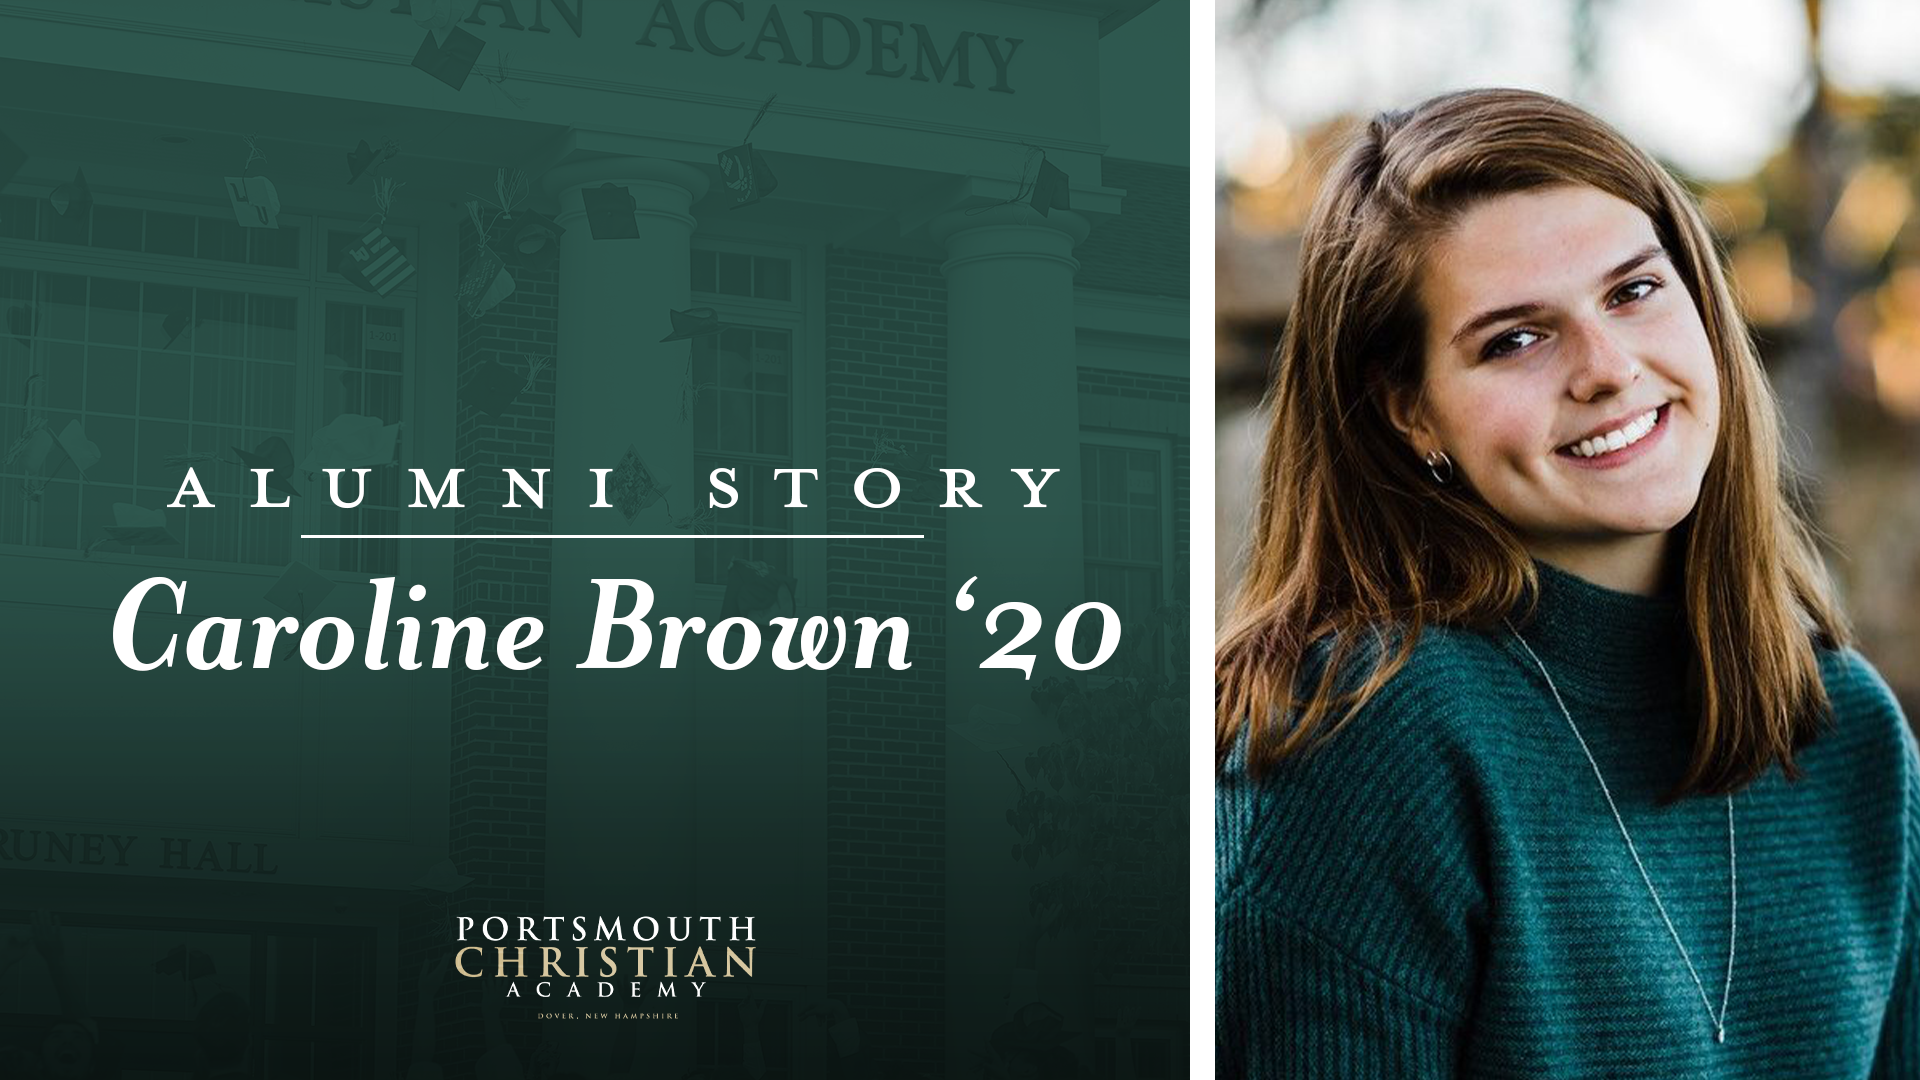 Alumni story: Caroline Brown, a graduate of a Christian school in 20.